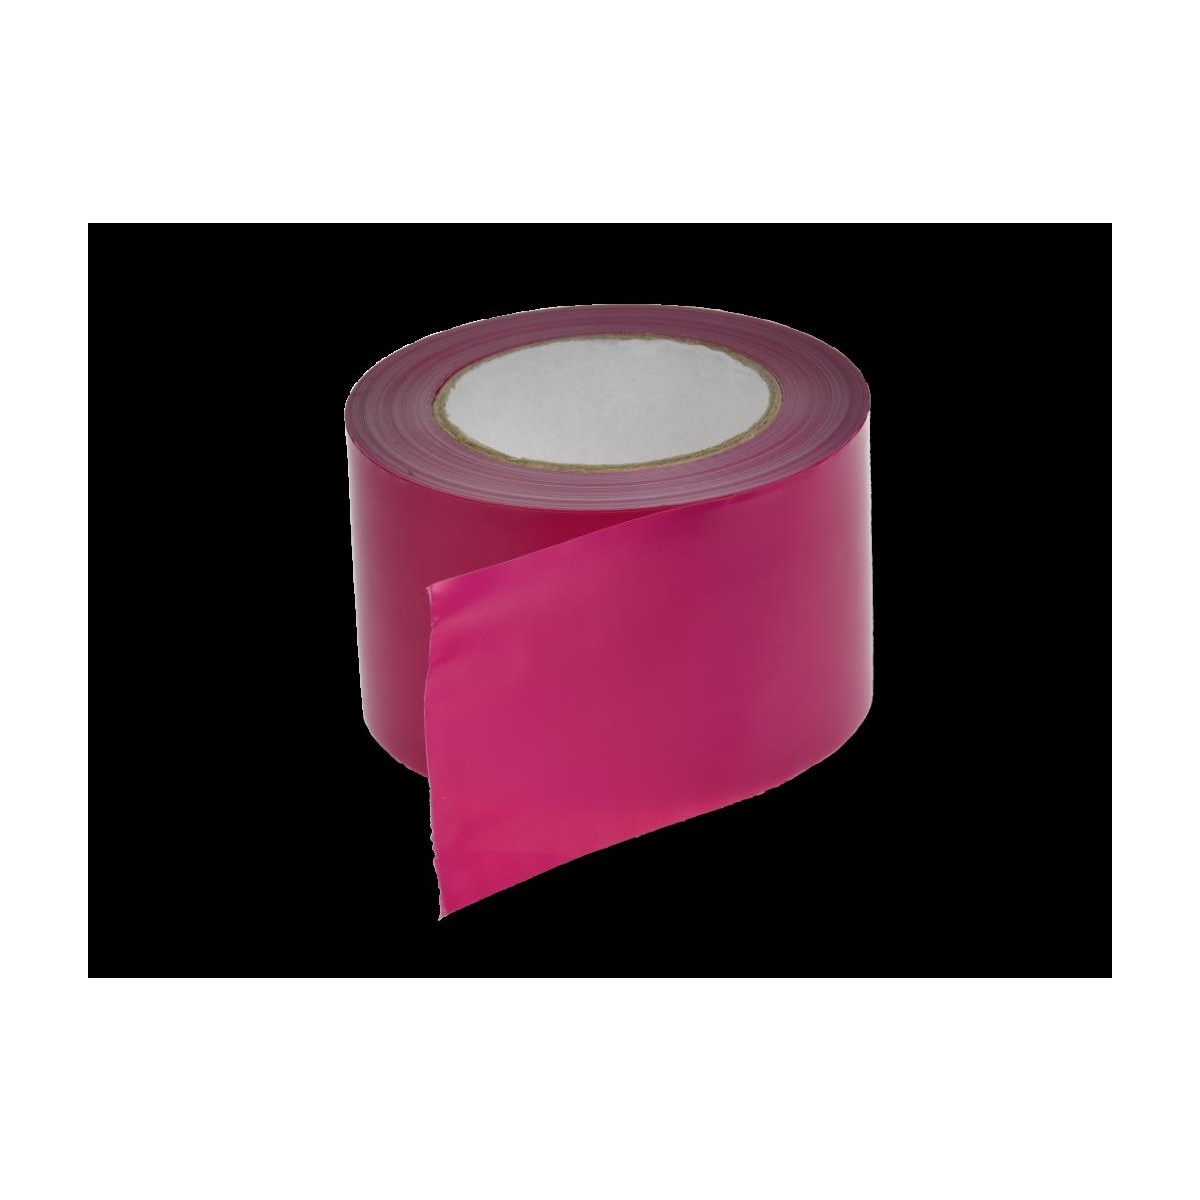 Absperrband pink 75 mm x 250 m 1 Rolle